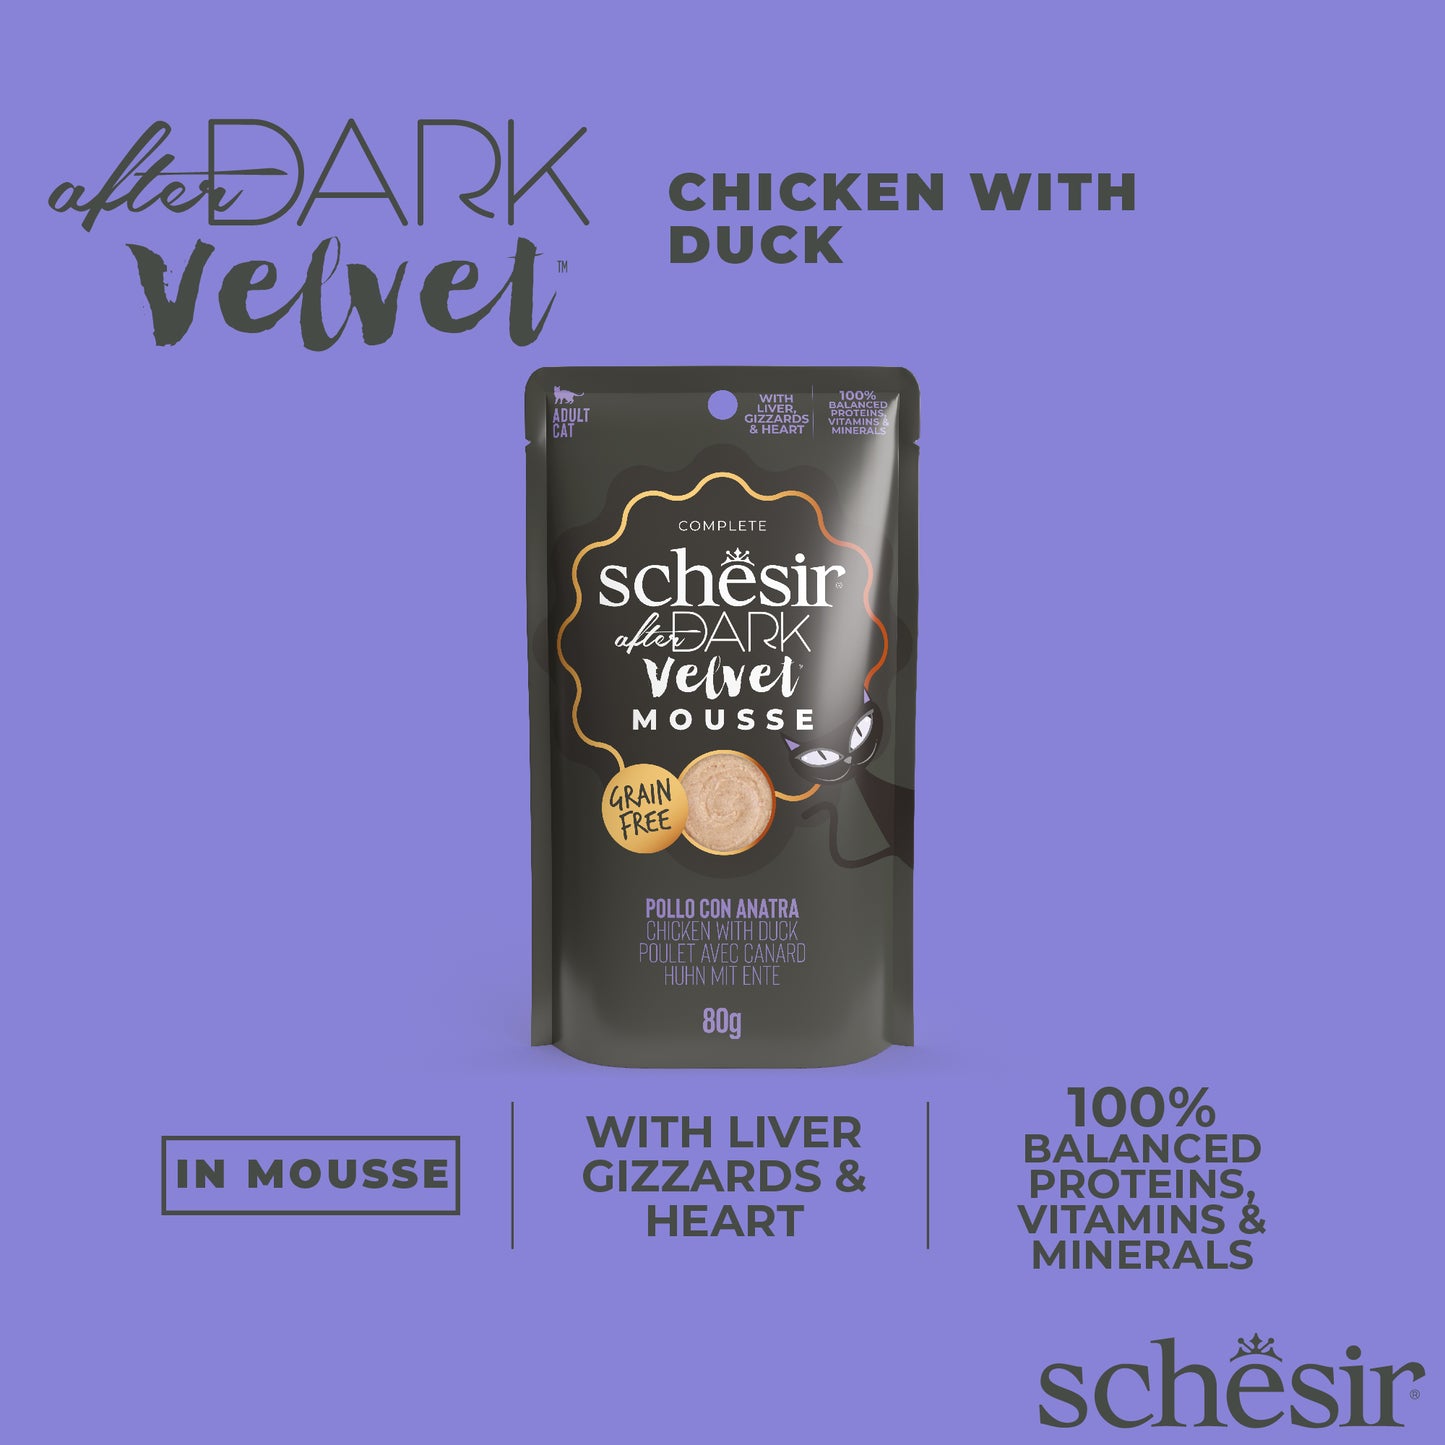 [5% OFF NNC Members] Schesir After Dark Velvet Mousse - Chicken with Duck, 80g